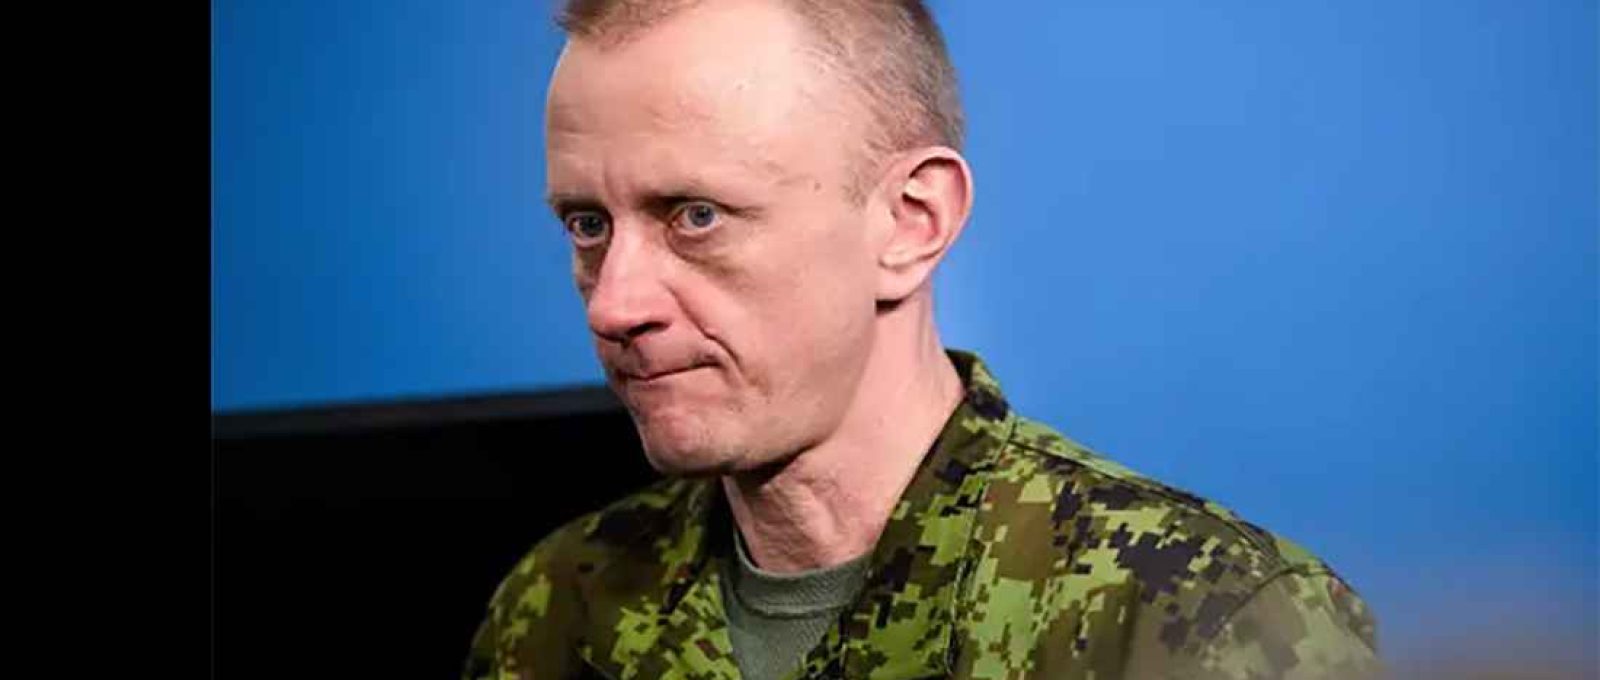 O coronel Margo Grosberg, comandante do Centro de Inteligência das Forças de Defesa da Estônia
(Ken Mürk/ERR).